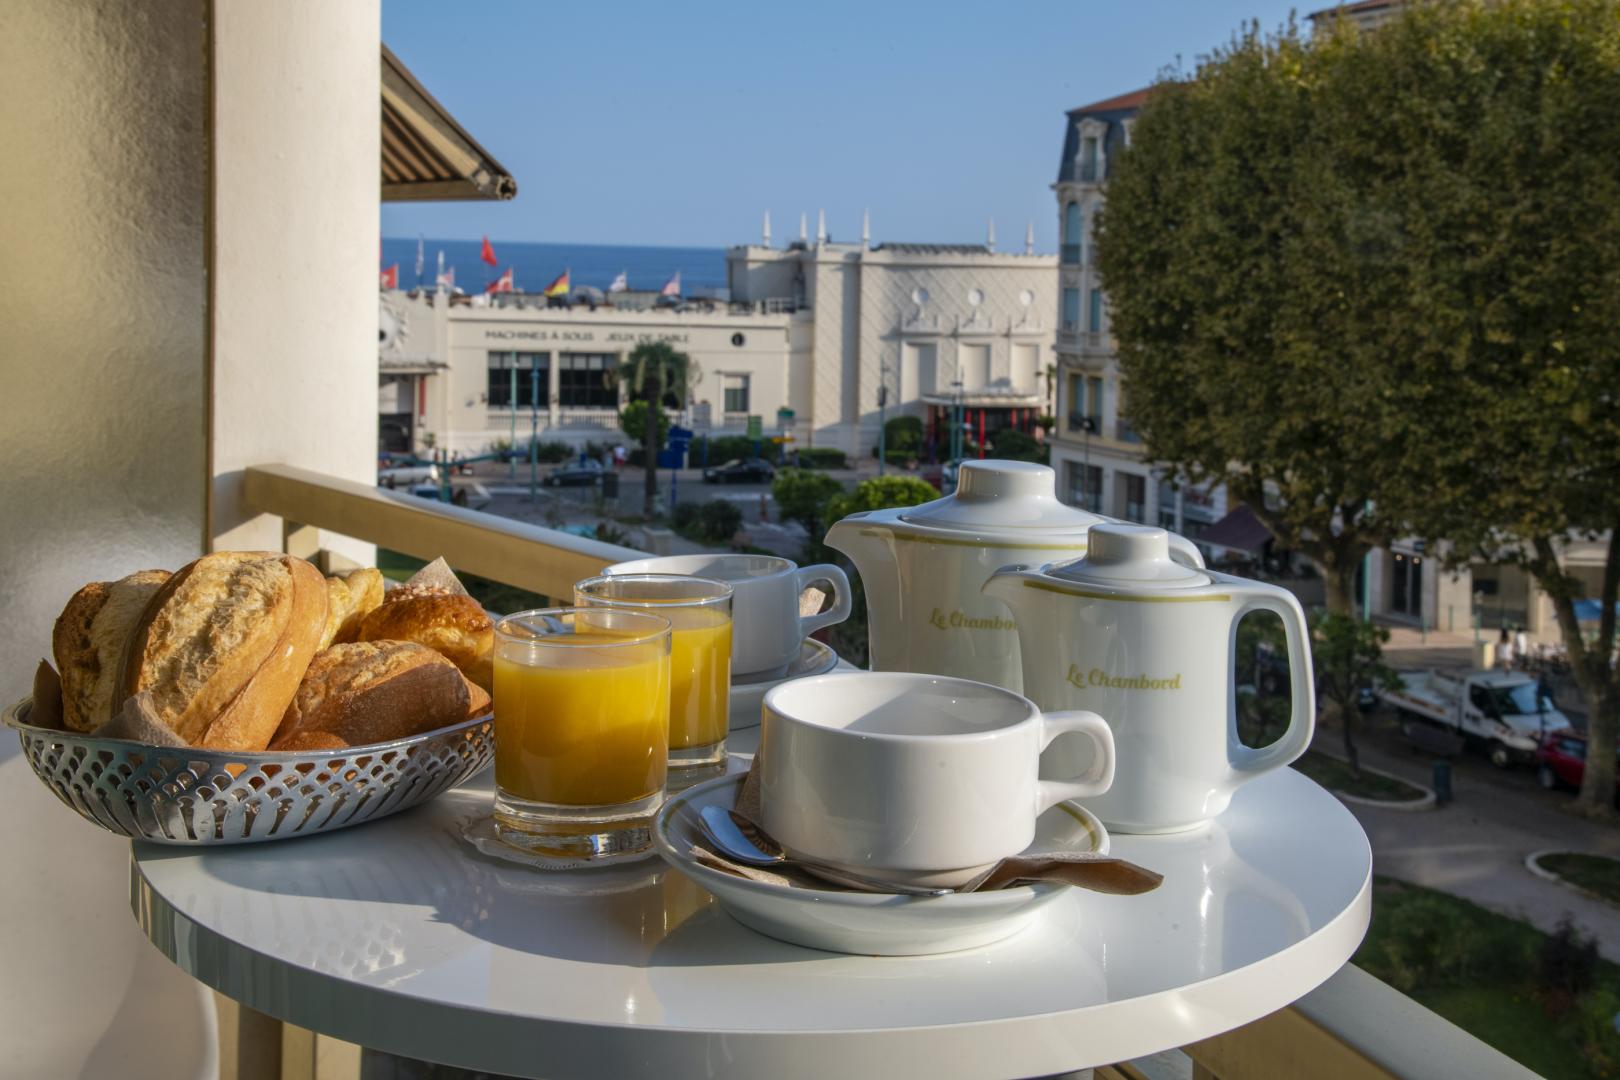 Hotel Chambord - Breakfast